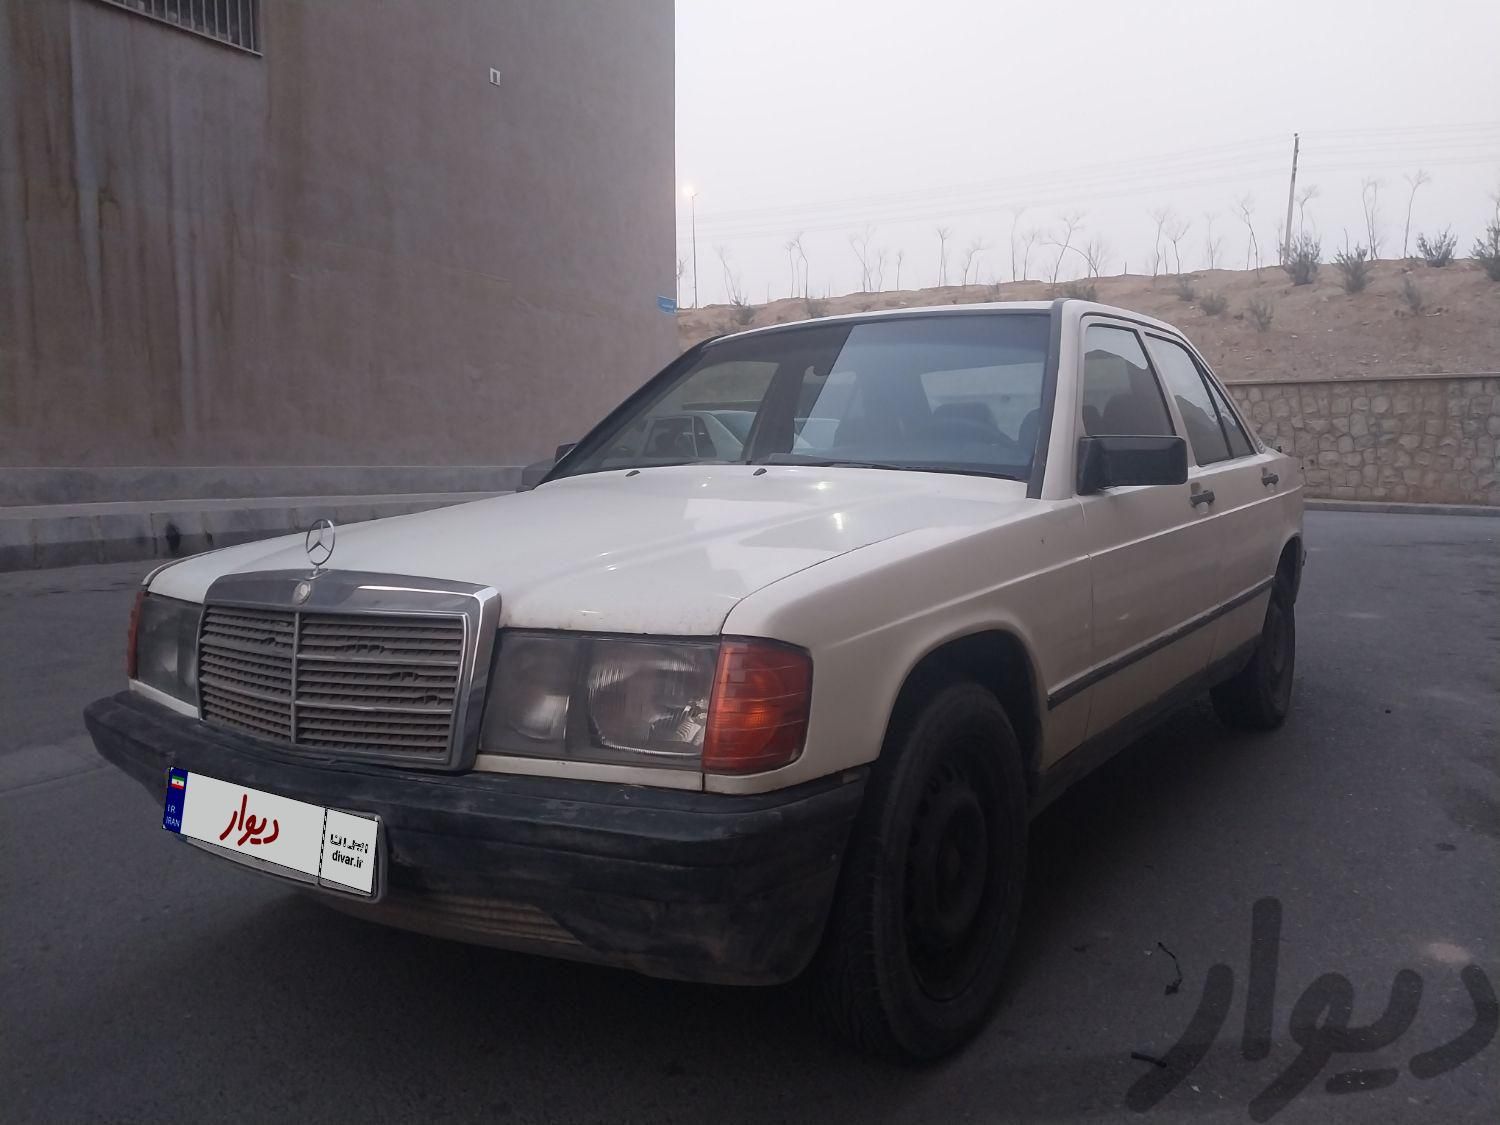 بنز کلاس ۱۹۰ یا کپل ۱۹۸۵|خودروی کلاسیک|تهران, افسریه|دیوار